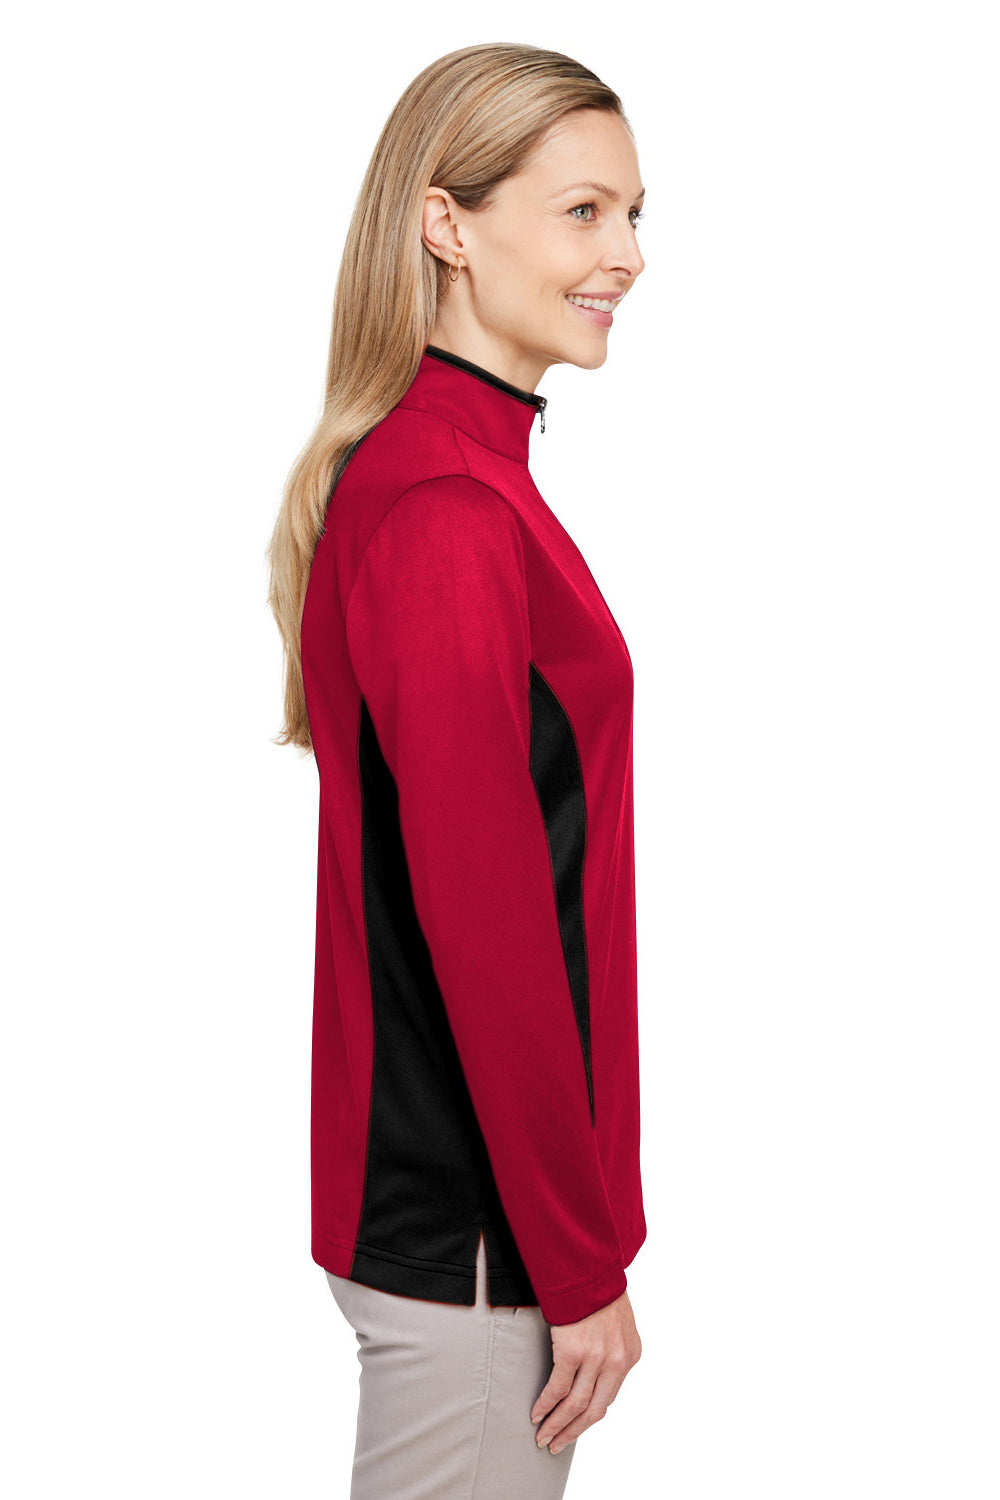 Harriton M786W Womens Flash Performance Moisture Wicking Colorblock 1/4 Zip Sweatshirt Red/Black Side